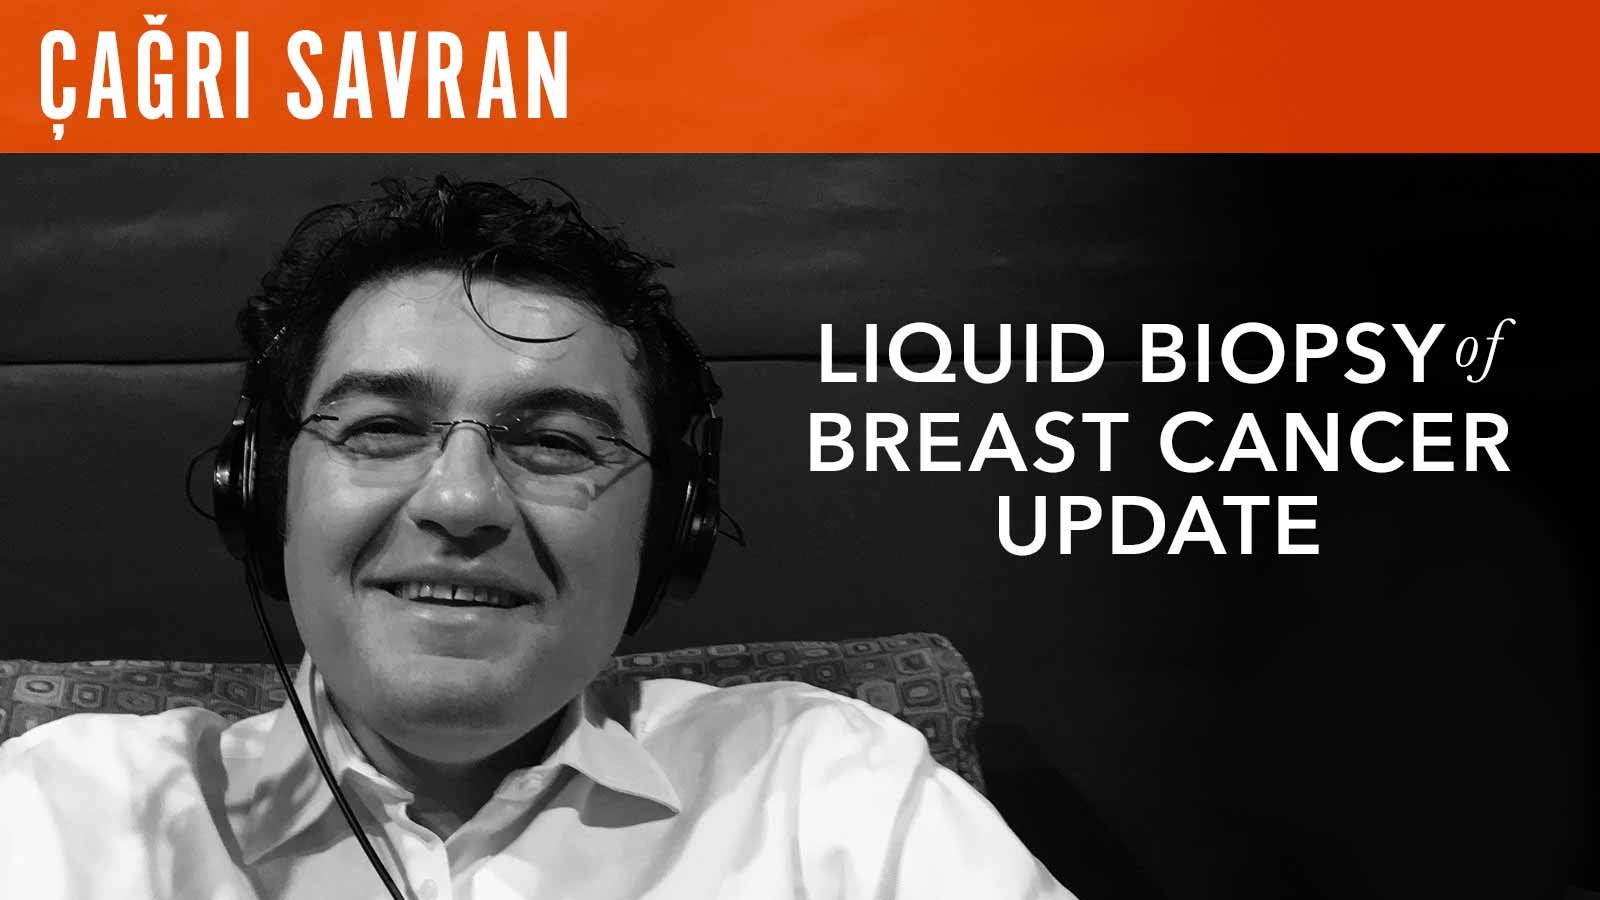 Çağrı Savran, "Liquid Biopsy of Breast Cancer Update"